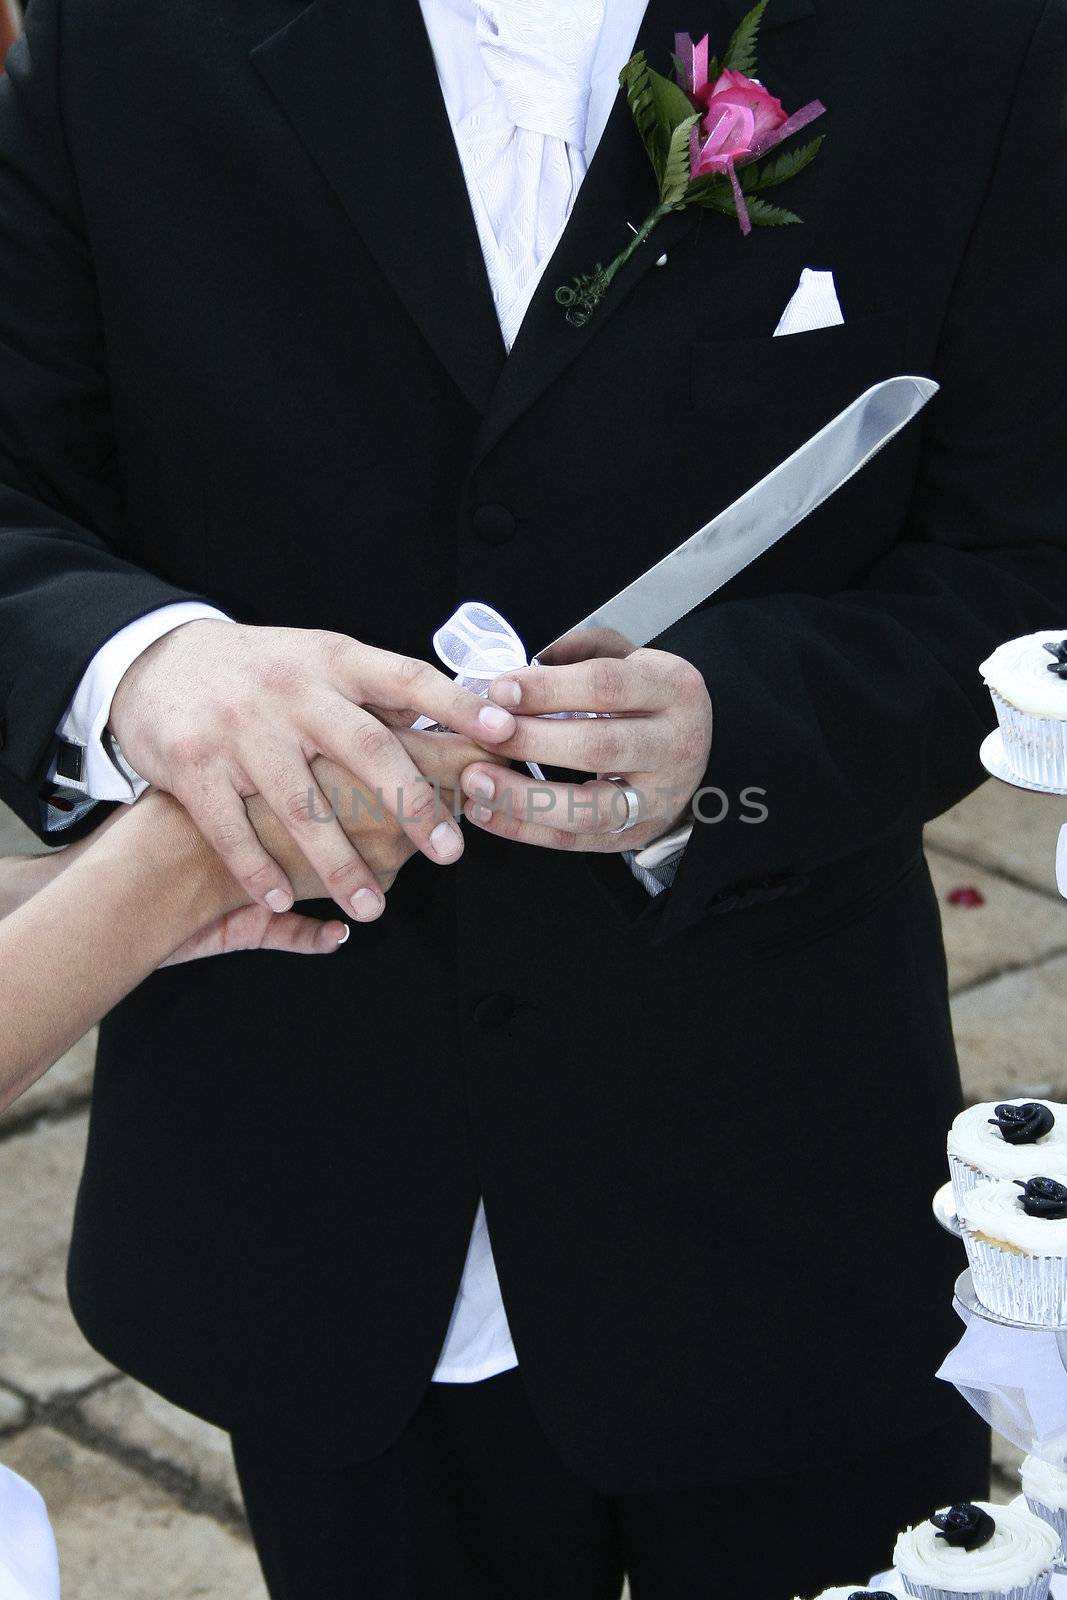 Bridal couple outdoors holding cake knife together